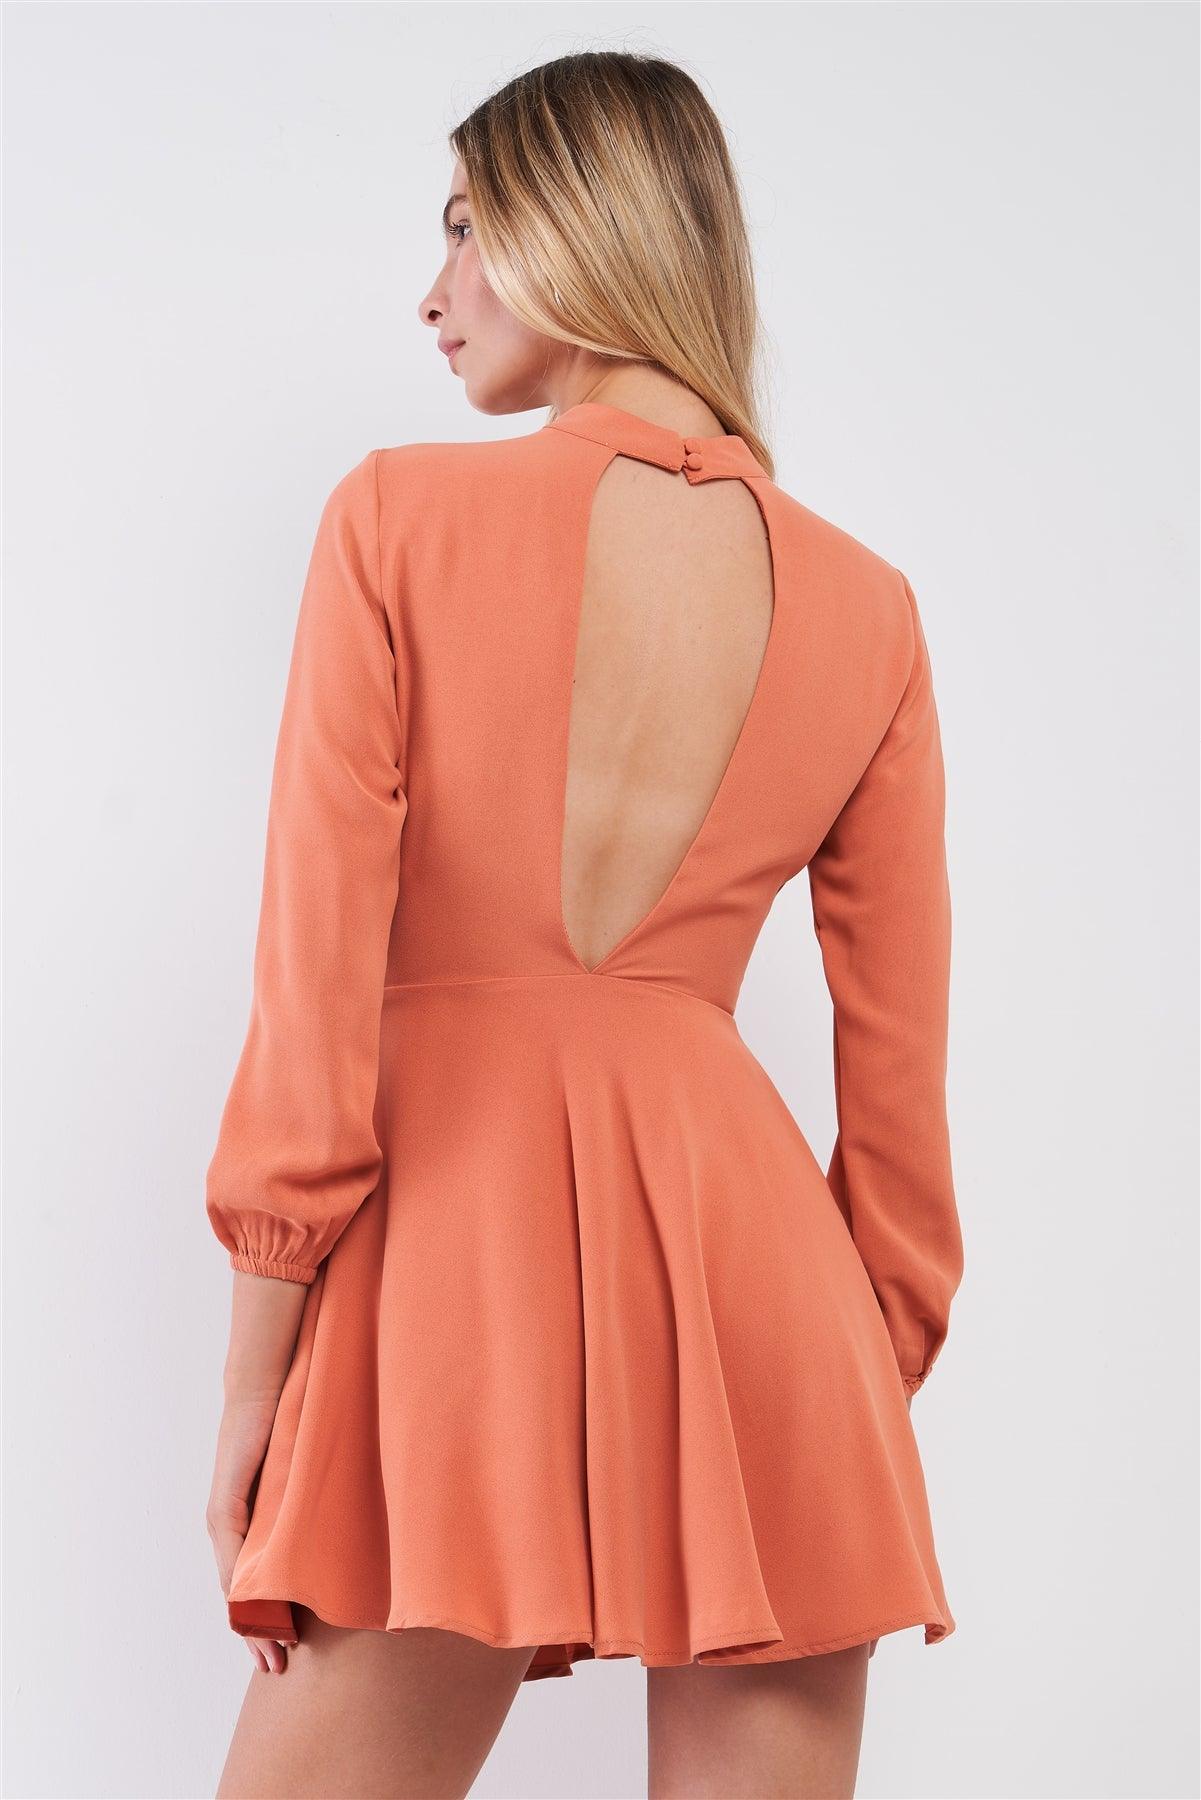 Brick Coral Long Sleeve Open Back A-Line Flare Mini Dress /1-2-1